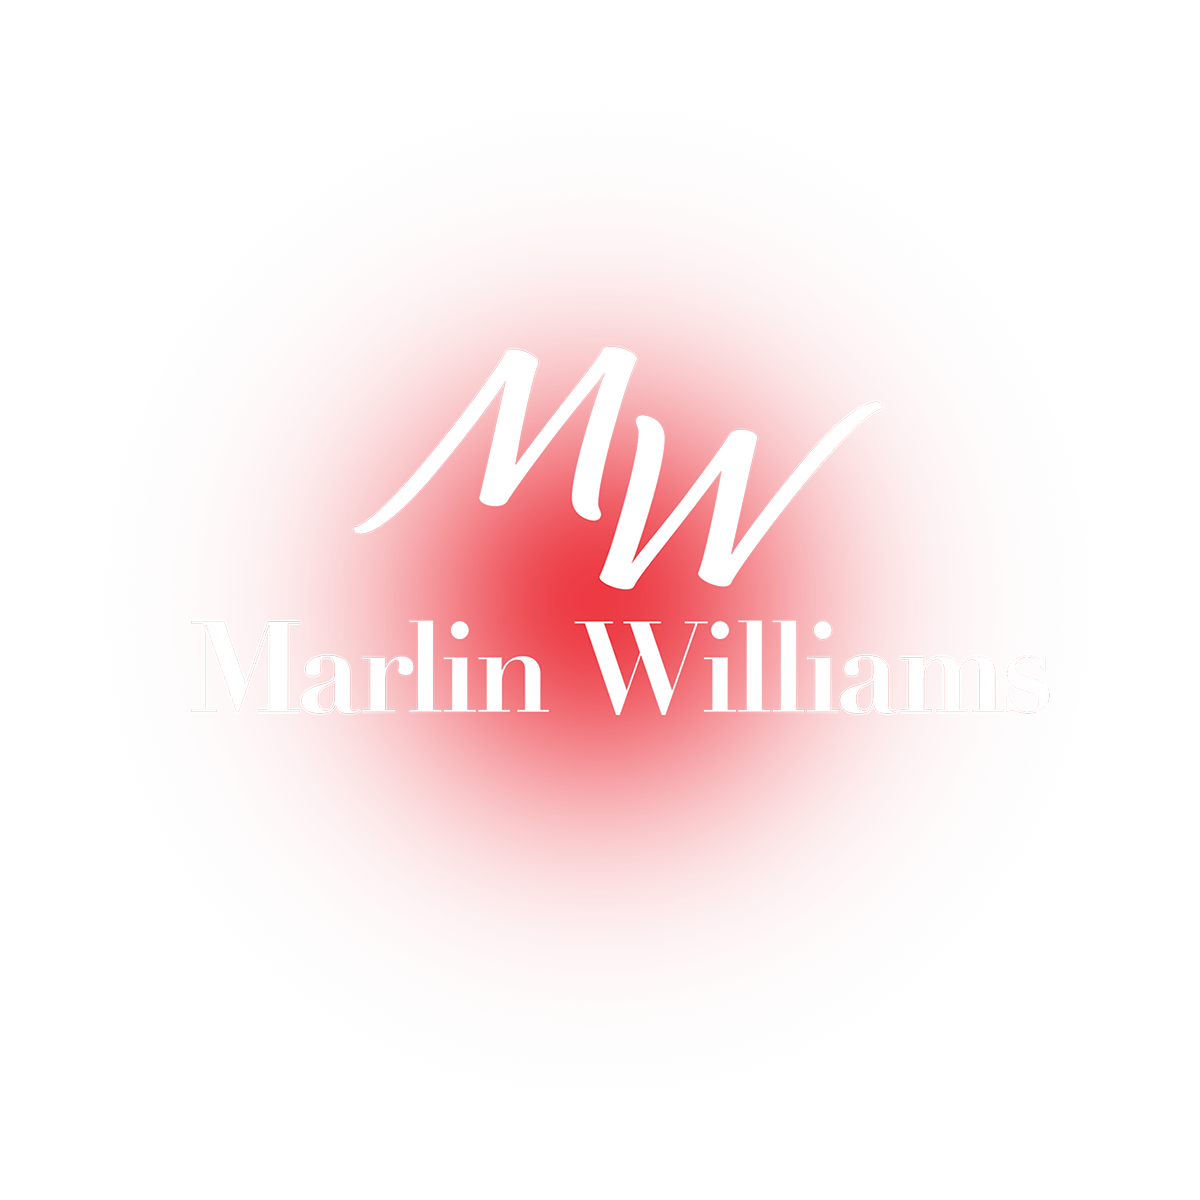 Marlin Williams